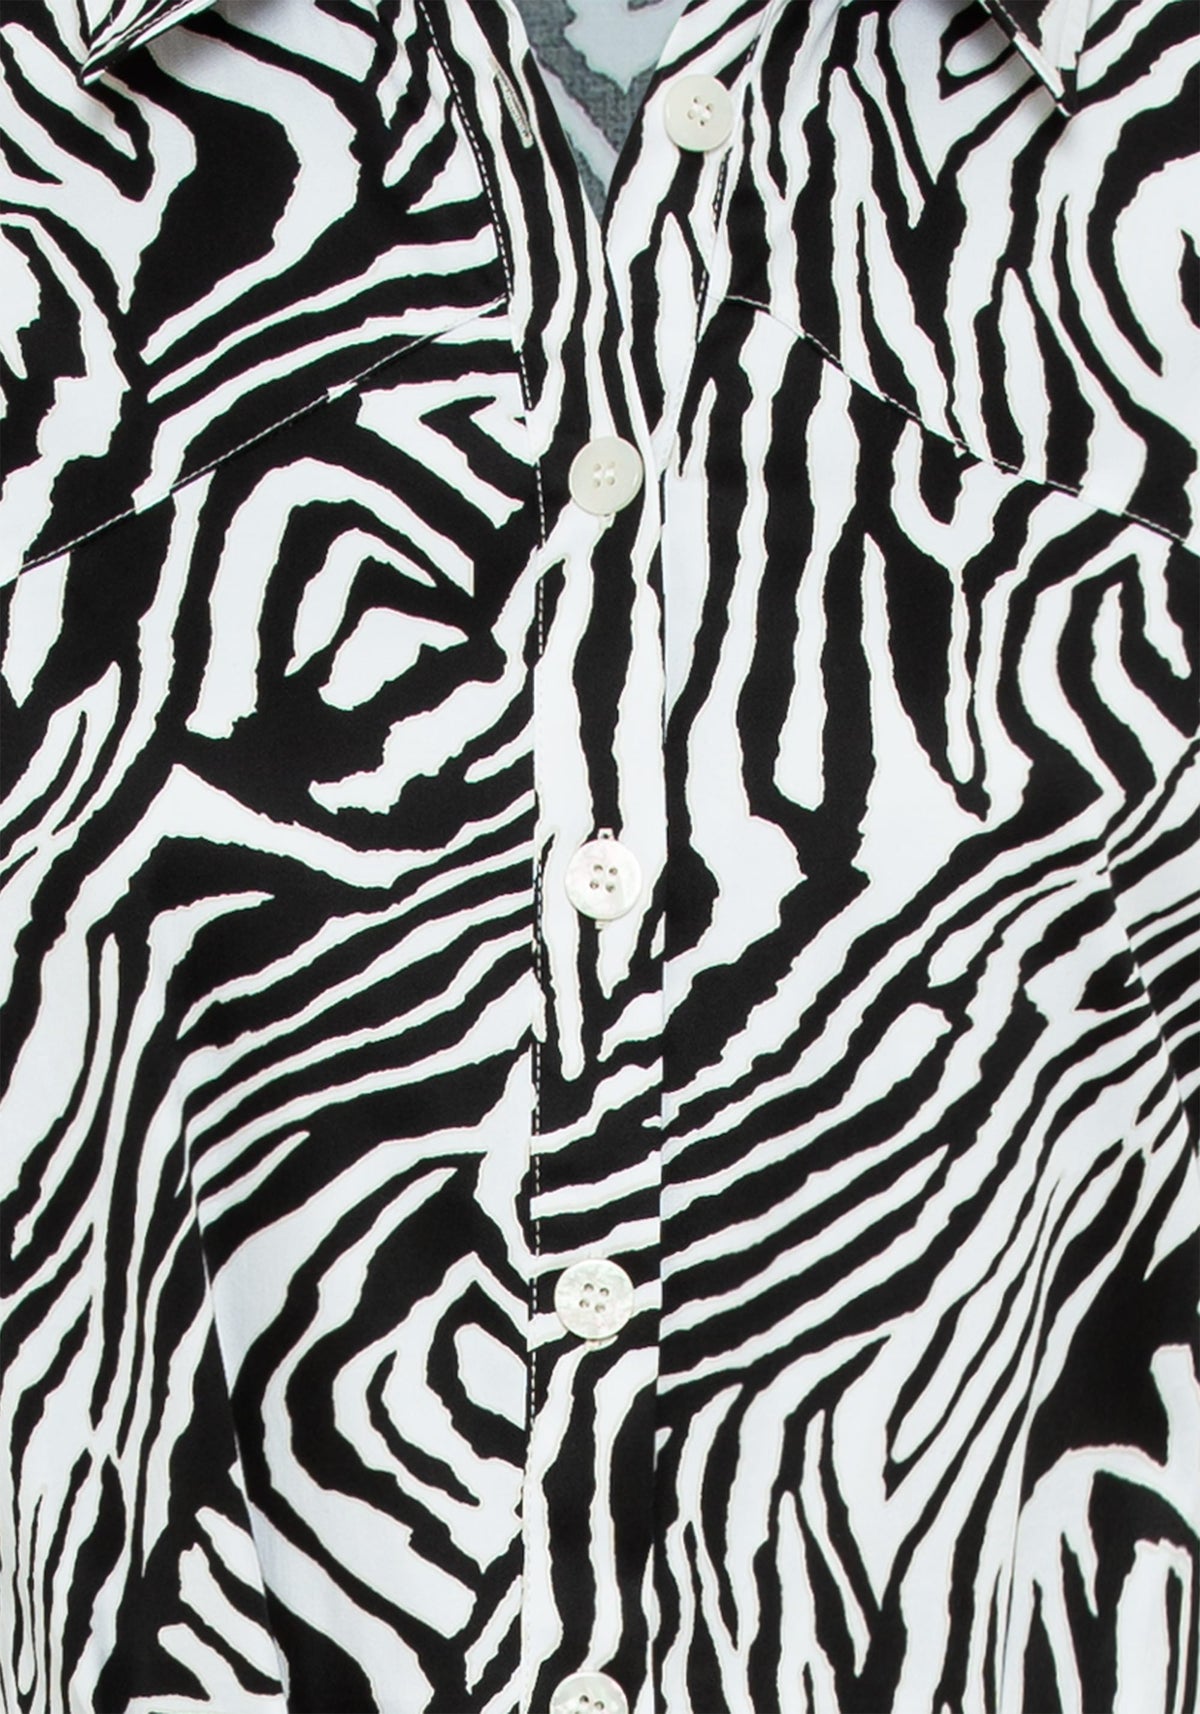 3/4 Sleeve Zebra Print A-Line Midi Shirt Dress